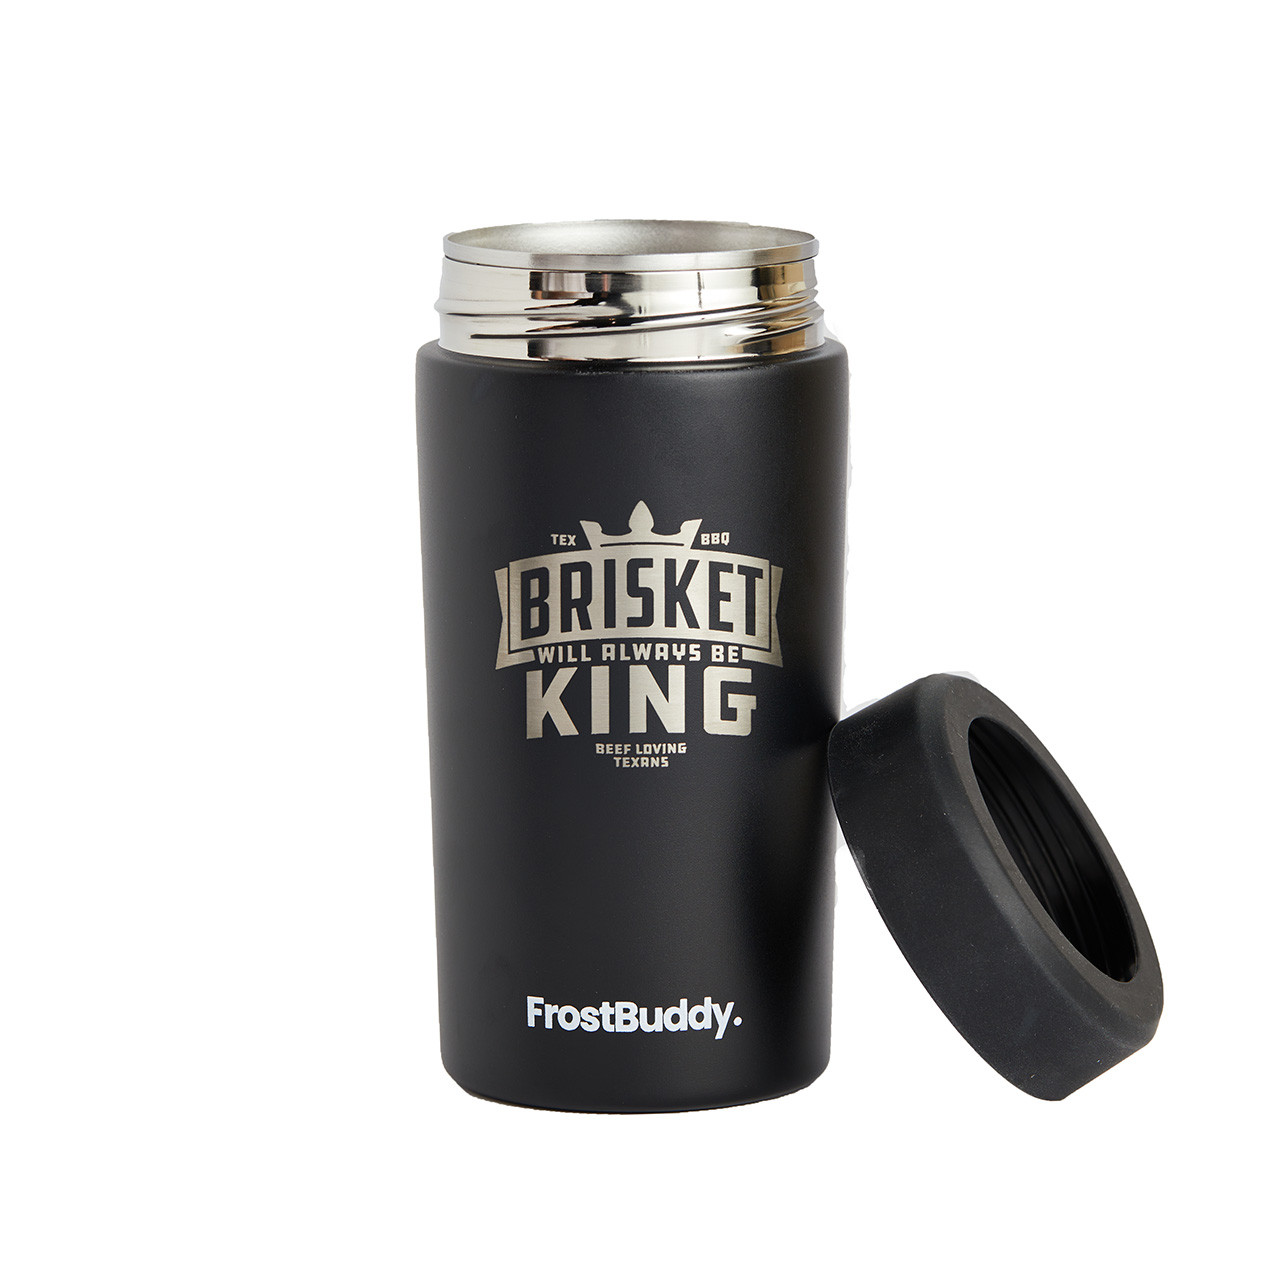 Brisket Is King Universal Drink Cooler